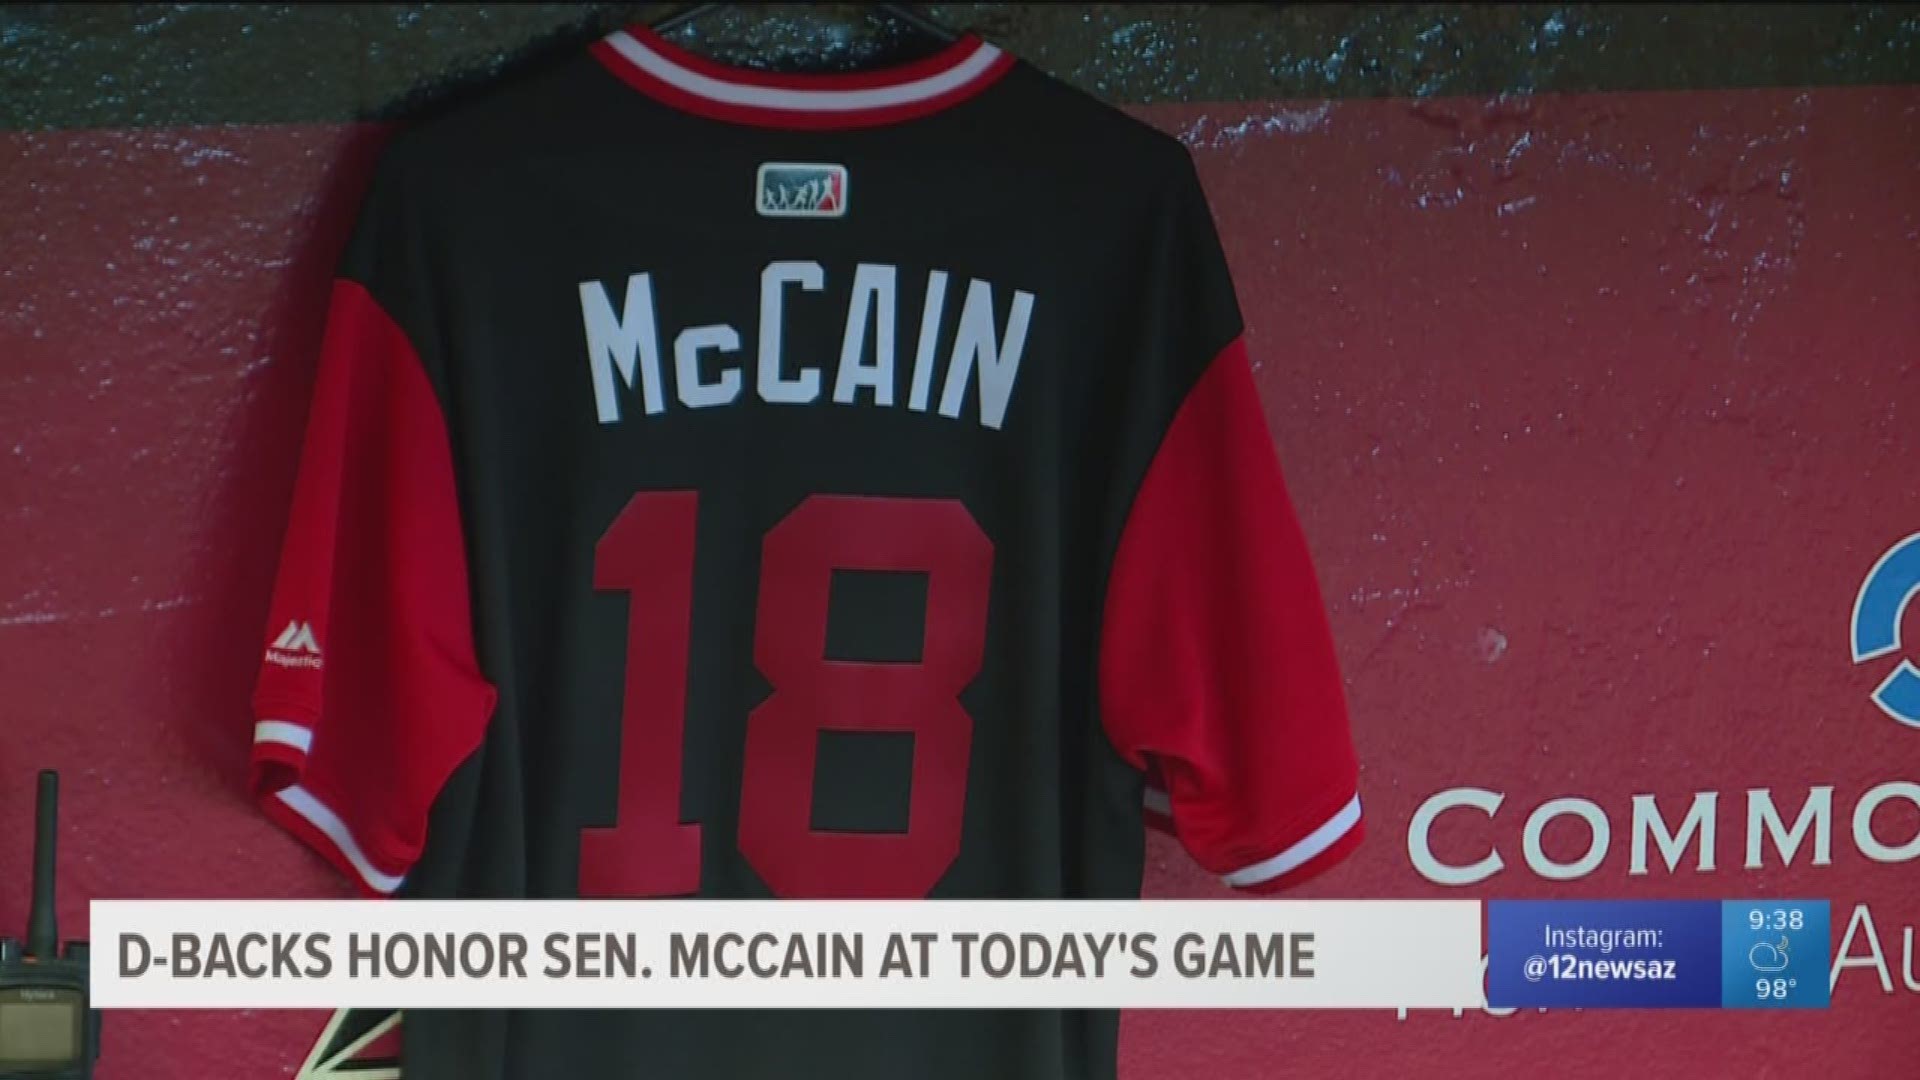 A moment of silence lead the Arizona Diamondbacks game Sunday. The team honored the late John McCain, an avid fan.